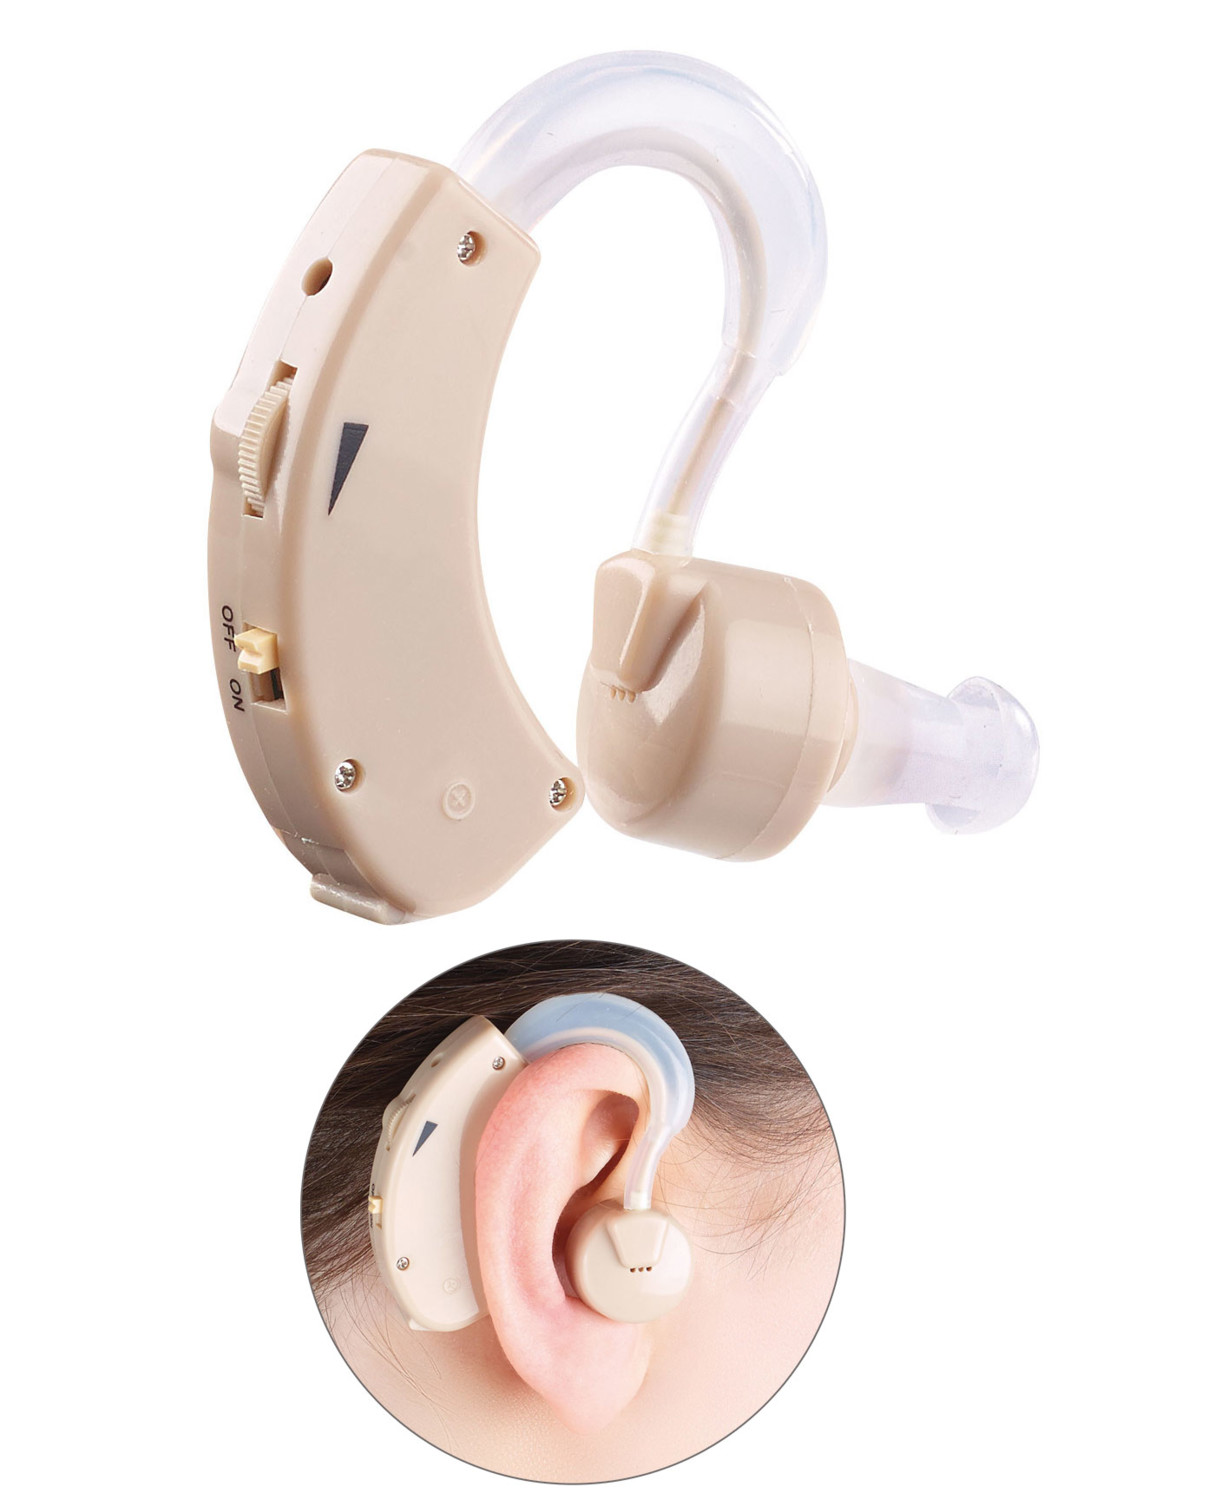 Amplificateur auditif avec pile interne, design discret, Amplificateurs  auditifs